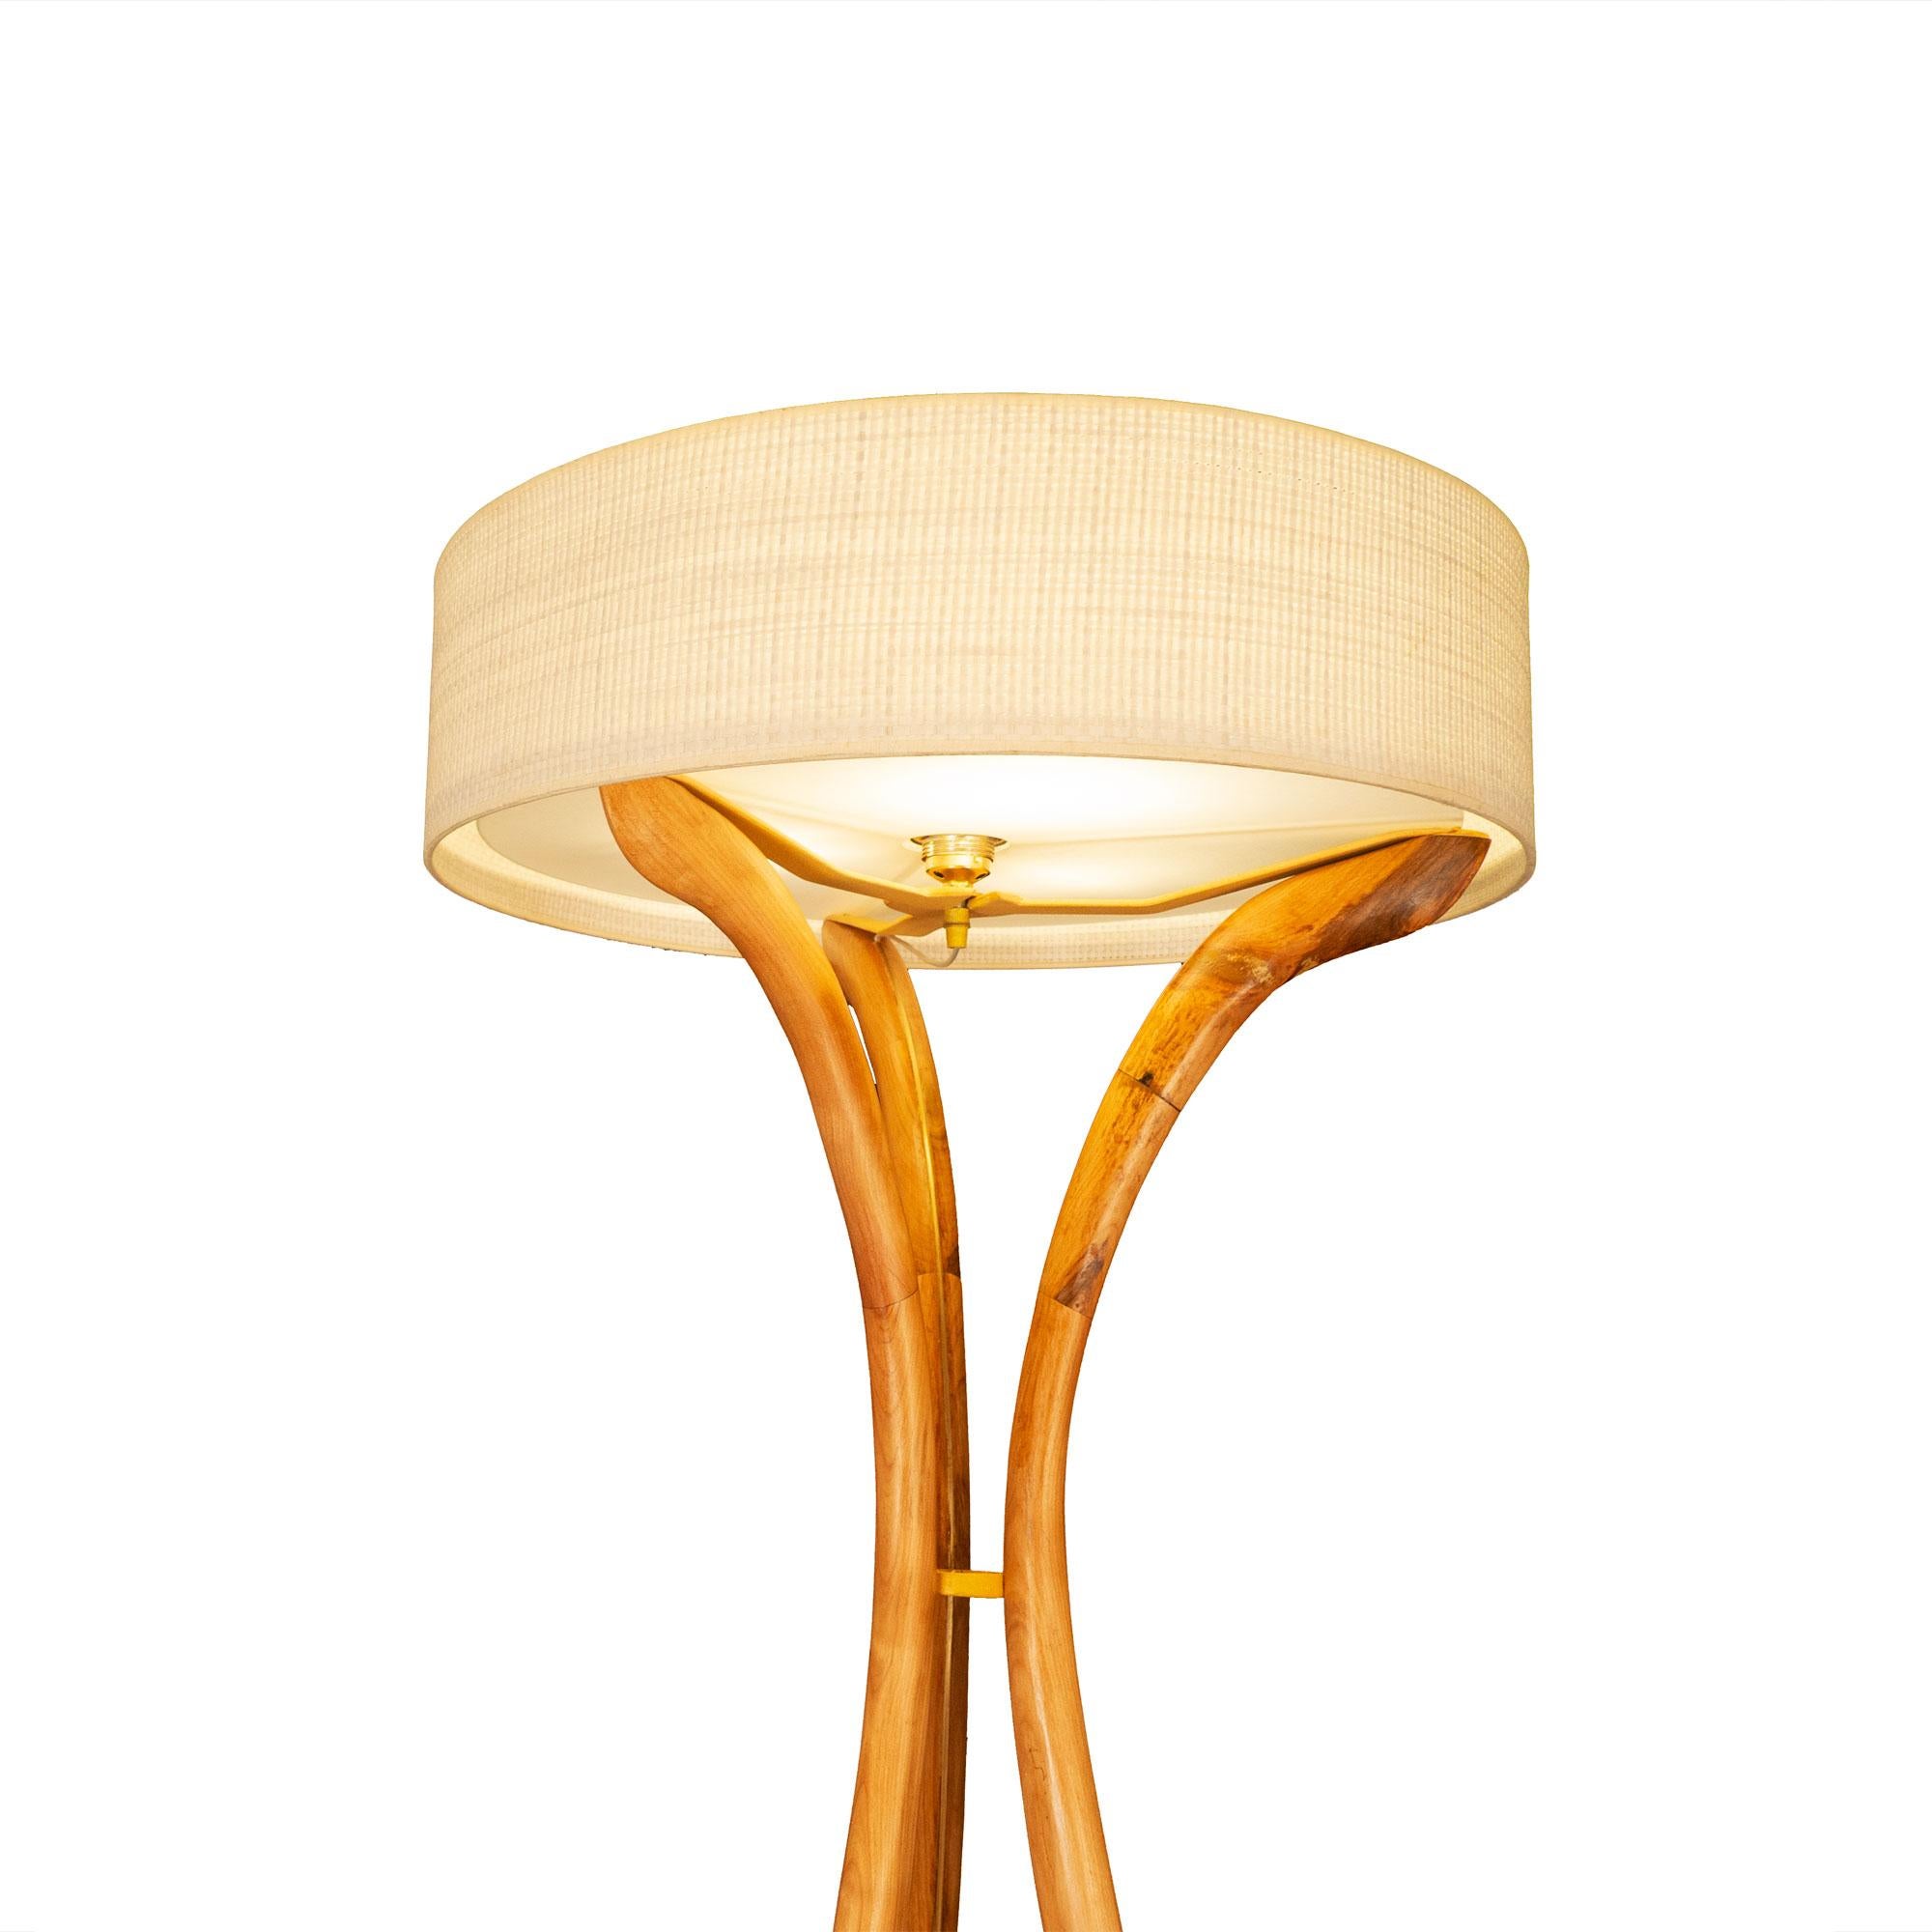 Spanish Contemporary Floor Lamp 